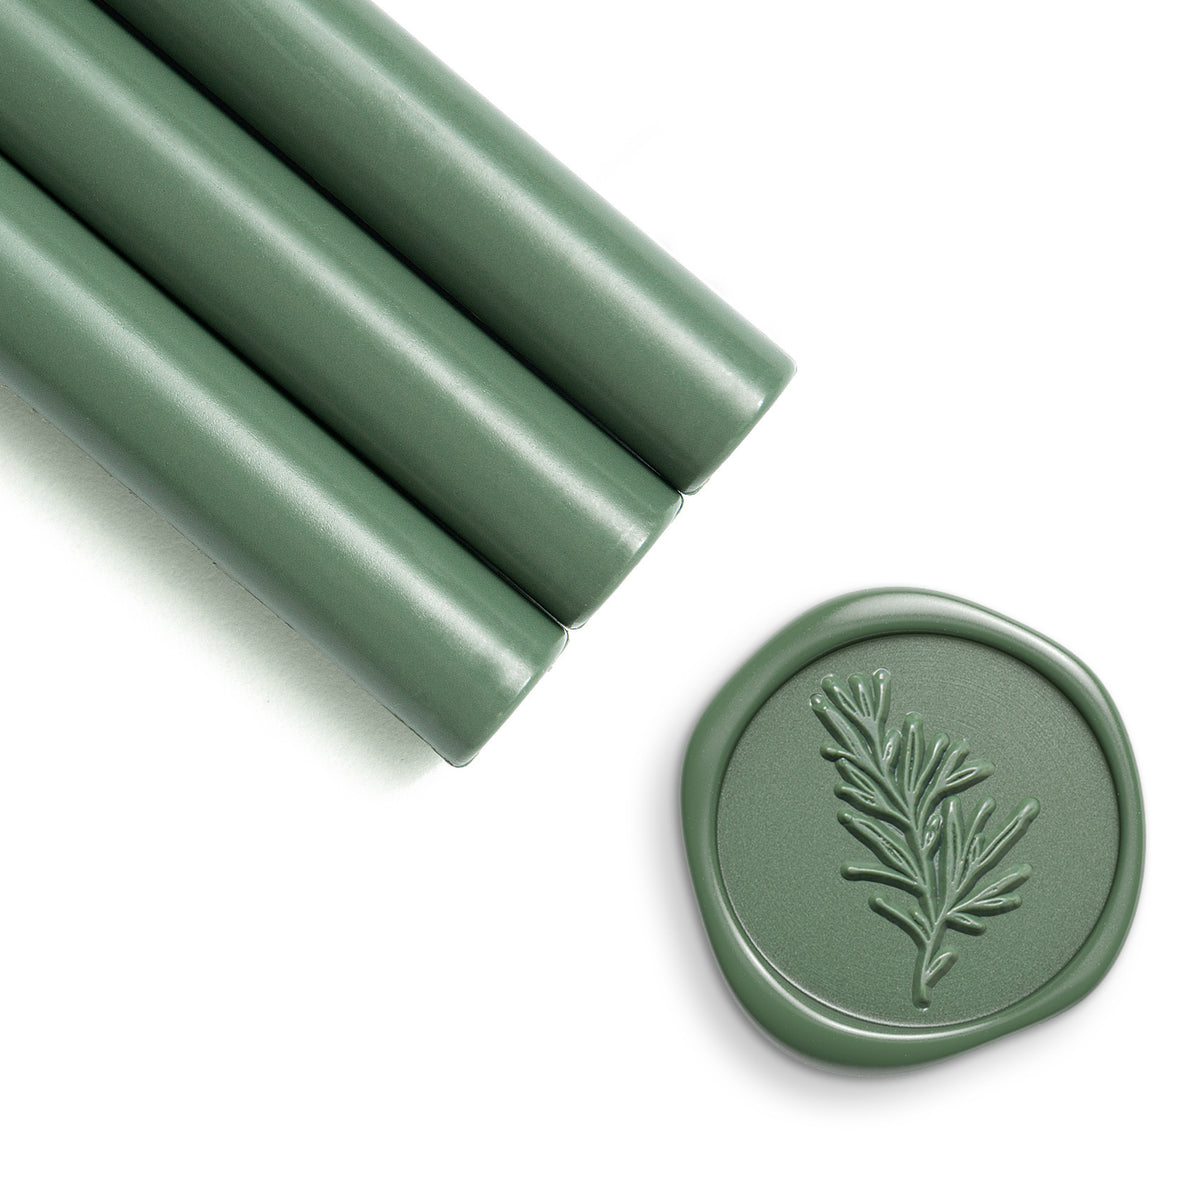 Olive Green Sealing Wax Sticks, 8 Pack